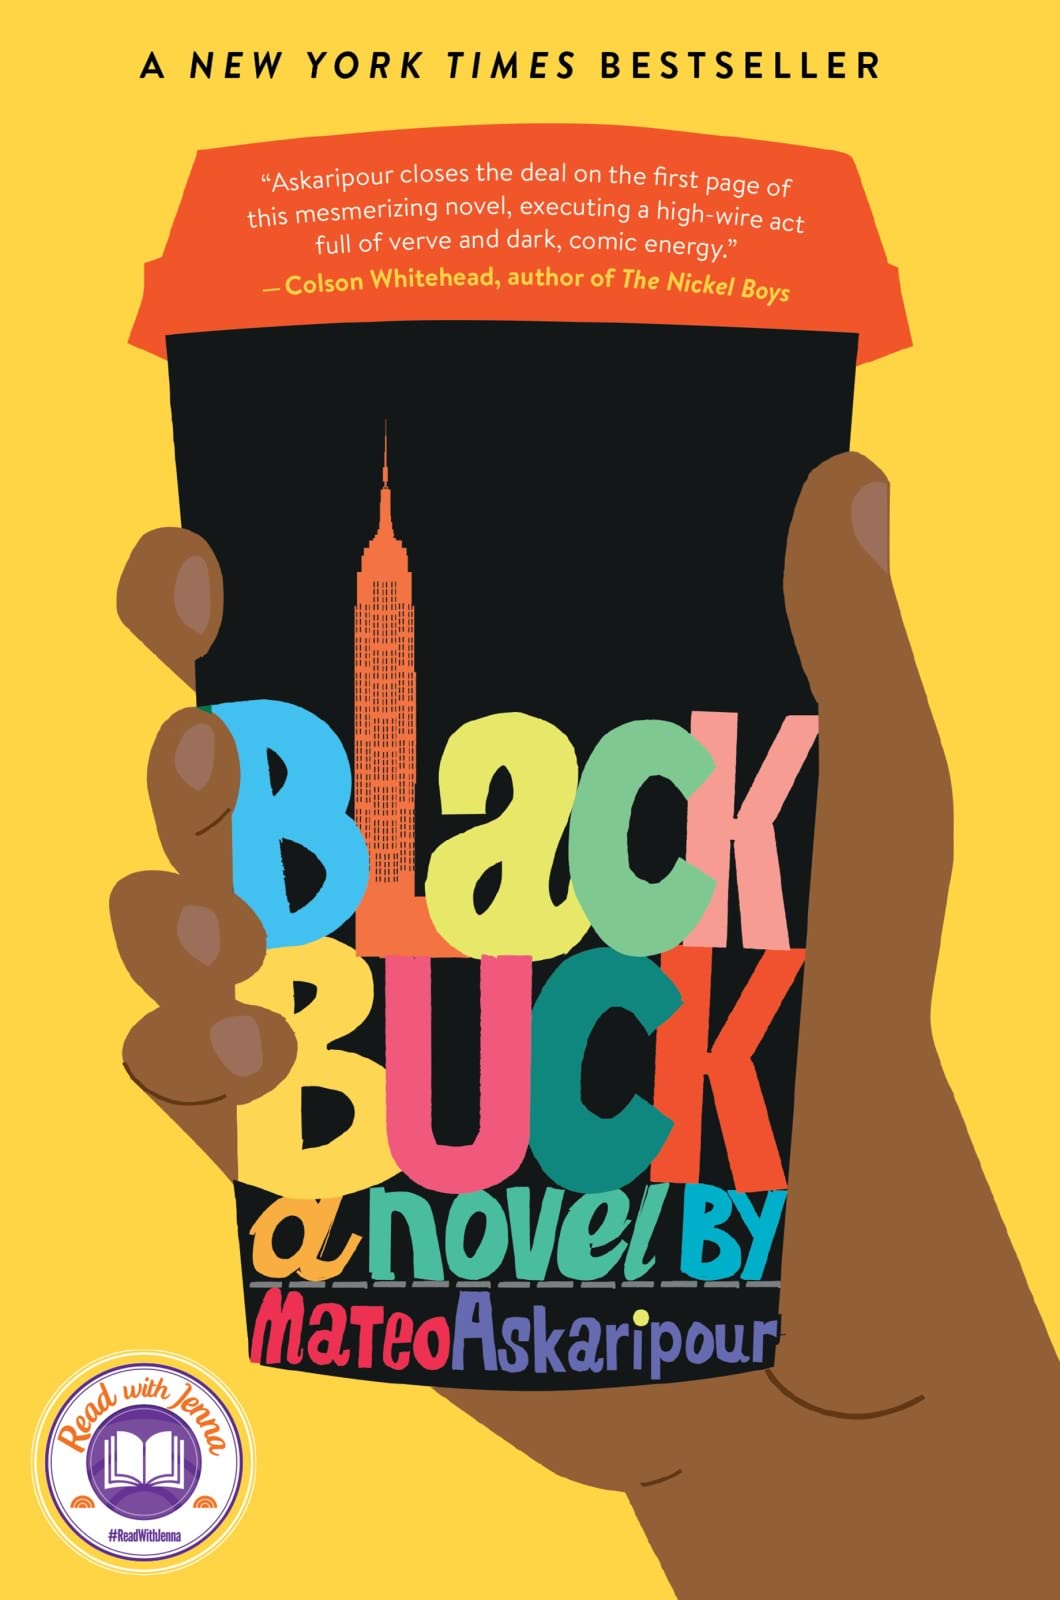 Black Buck, A Novel by Mateo Askaripour